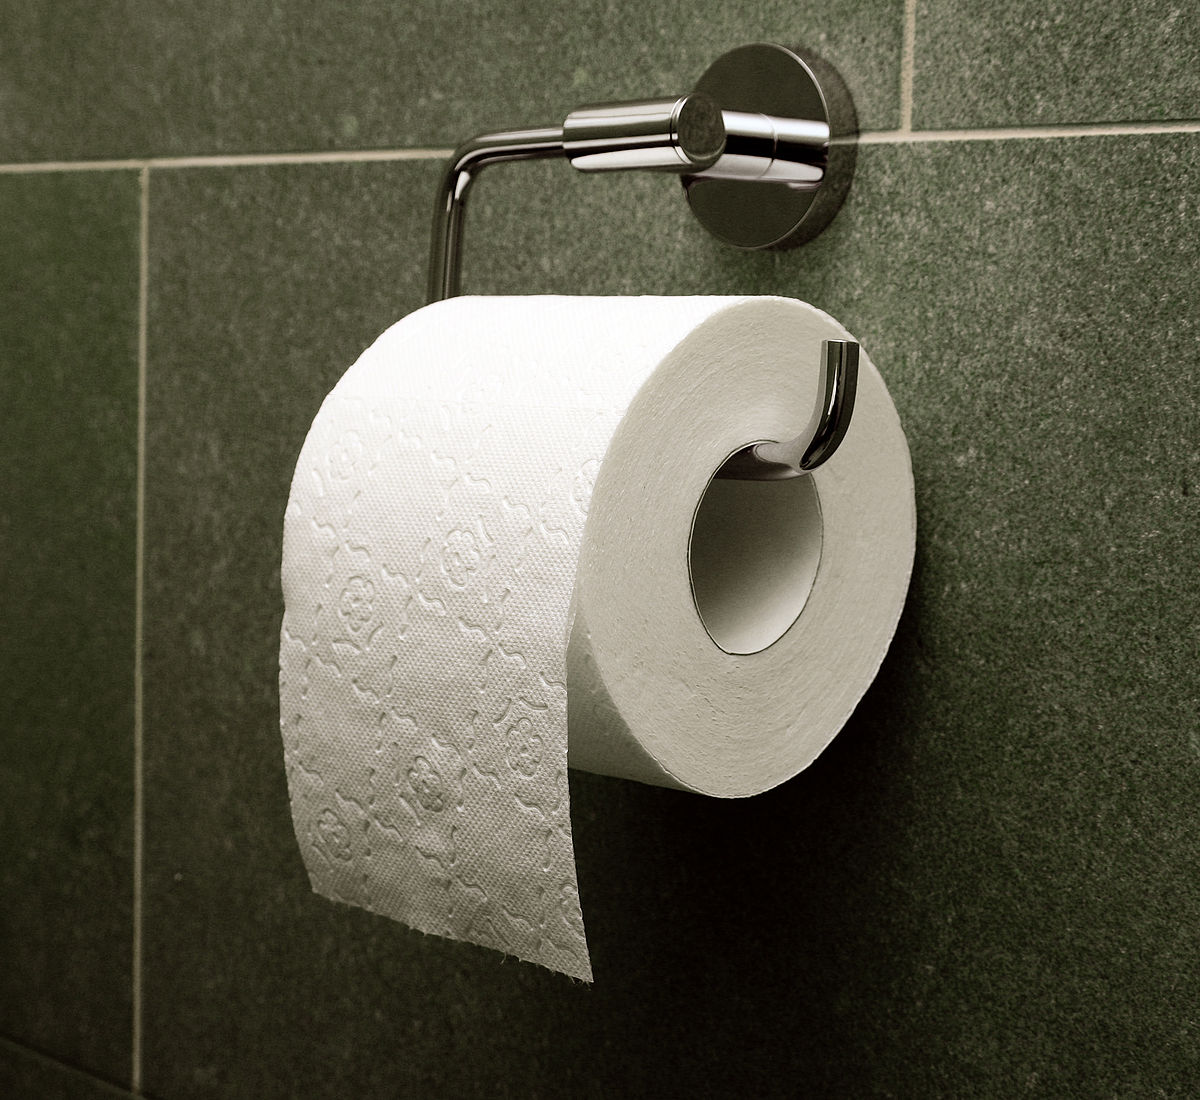 toilet paper shortage amid coronavirus pandemic